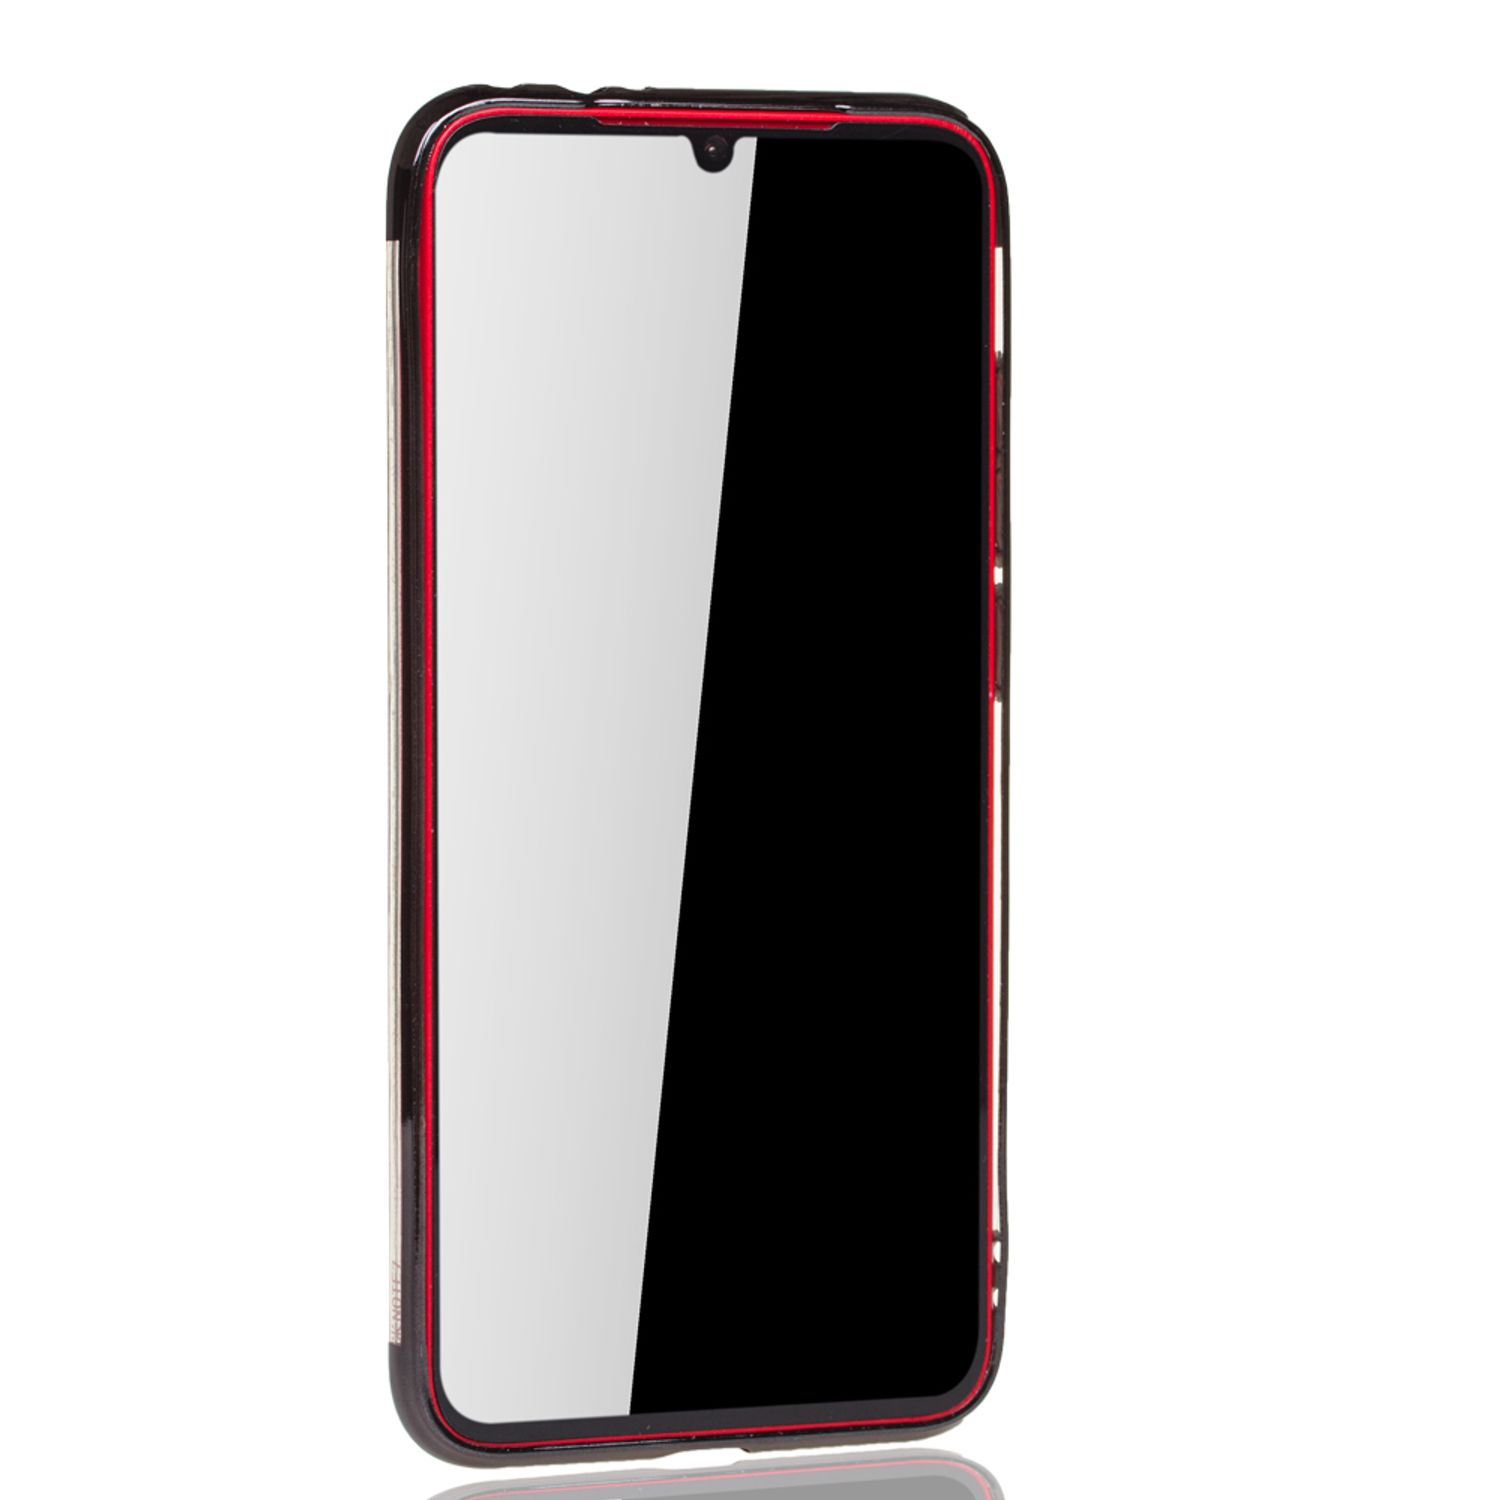 7 Redmi Pro, Note KÖNIG Schwarz Redmi / DESIGN Backcover, 7 Xiaomi, Note Schutzhülle,